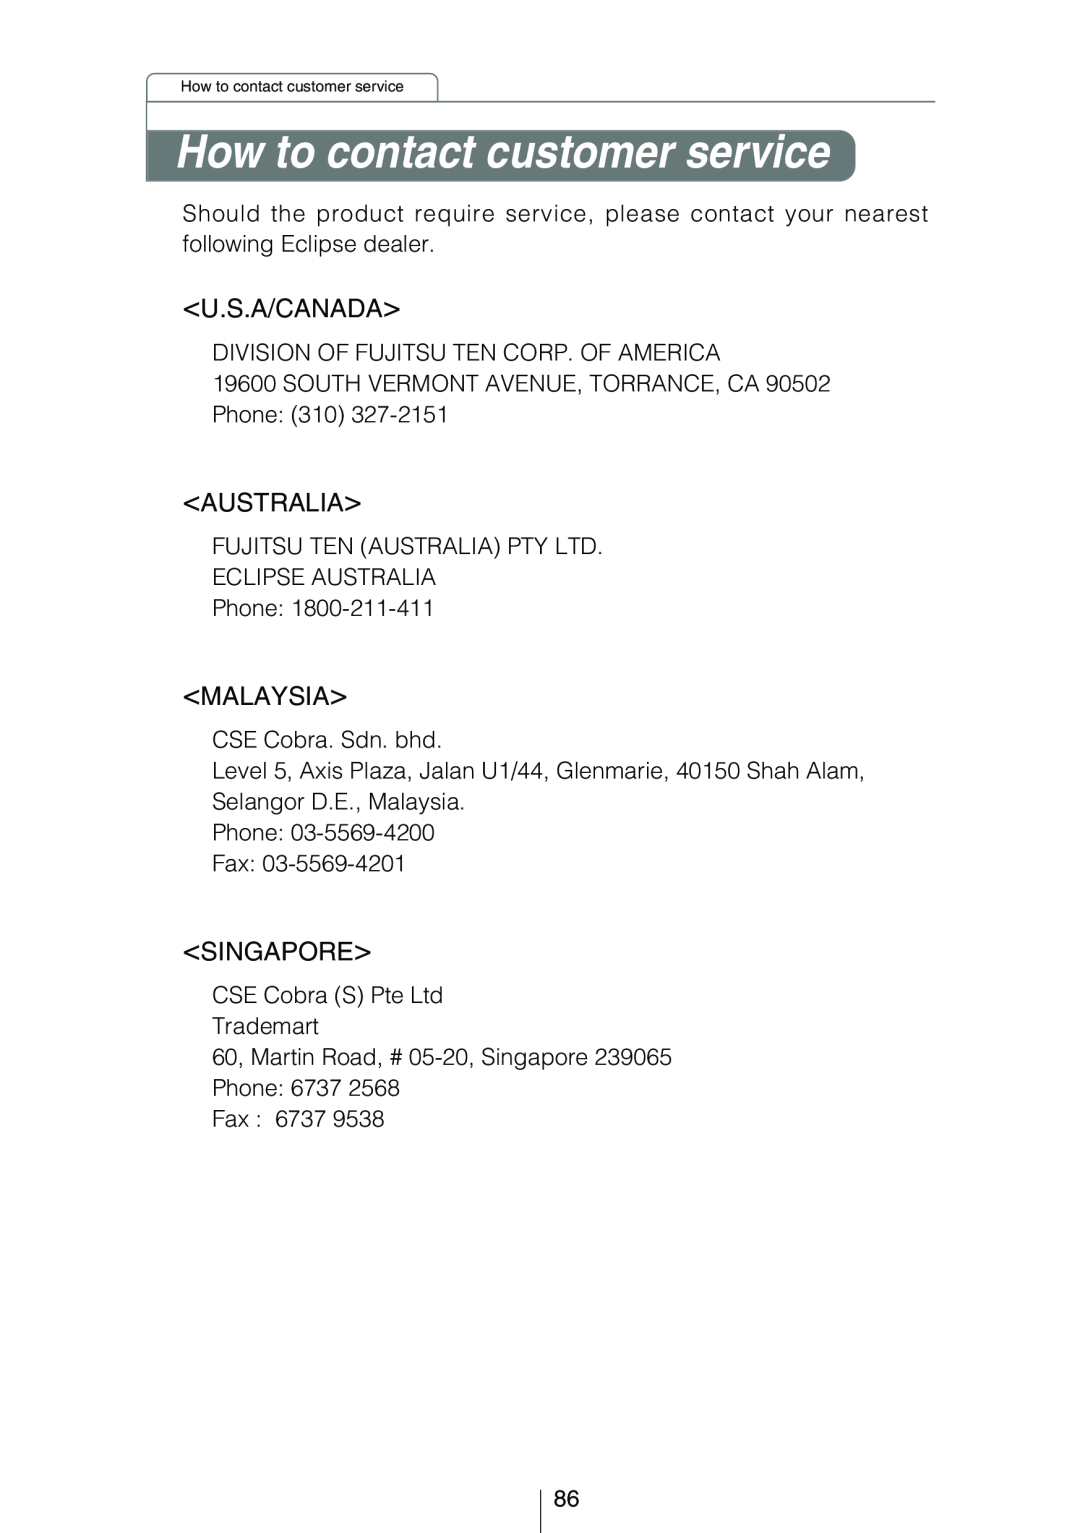 Eclipse - Fujitsu Ten CD3434 owner manual U.S.A/Canada, Australia, Malaysia, Singapore, How to contact customer service 